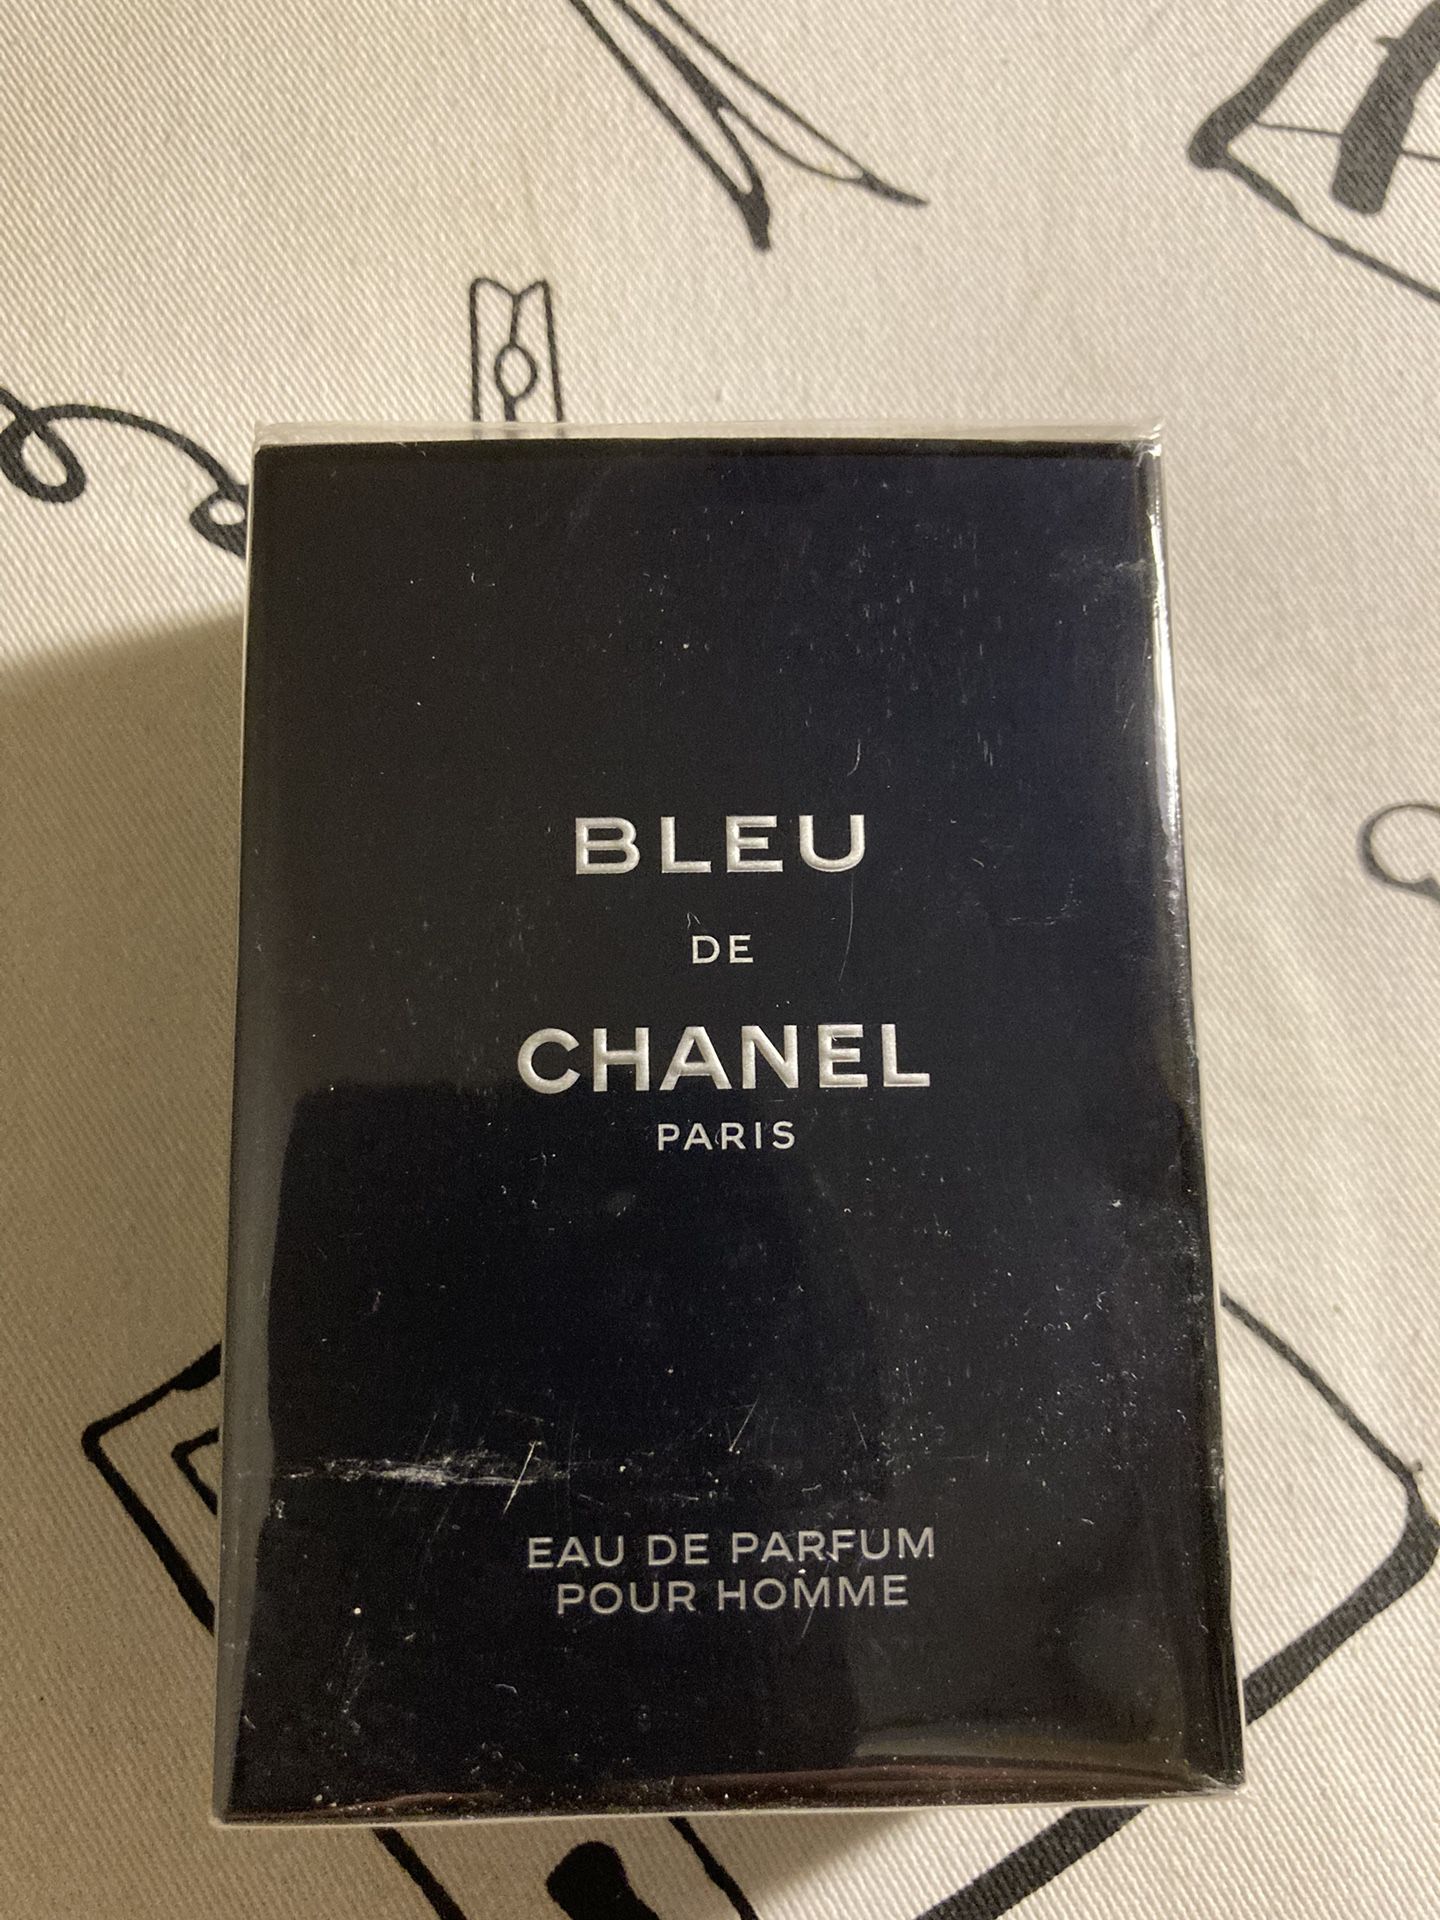 Channel Perfume